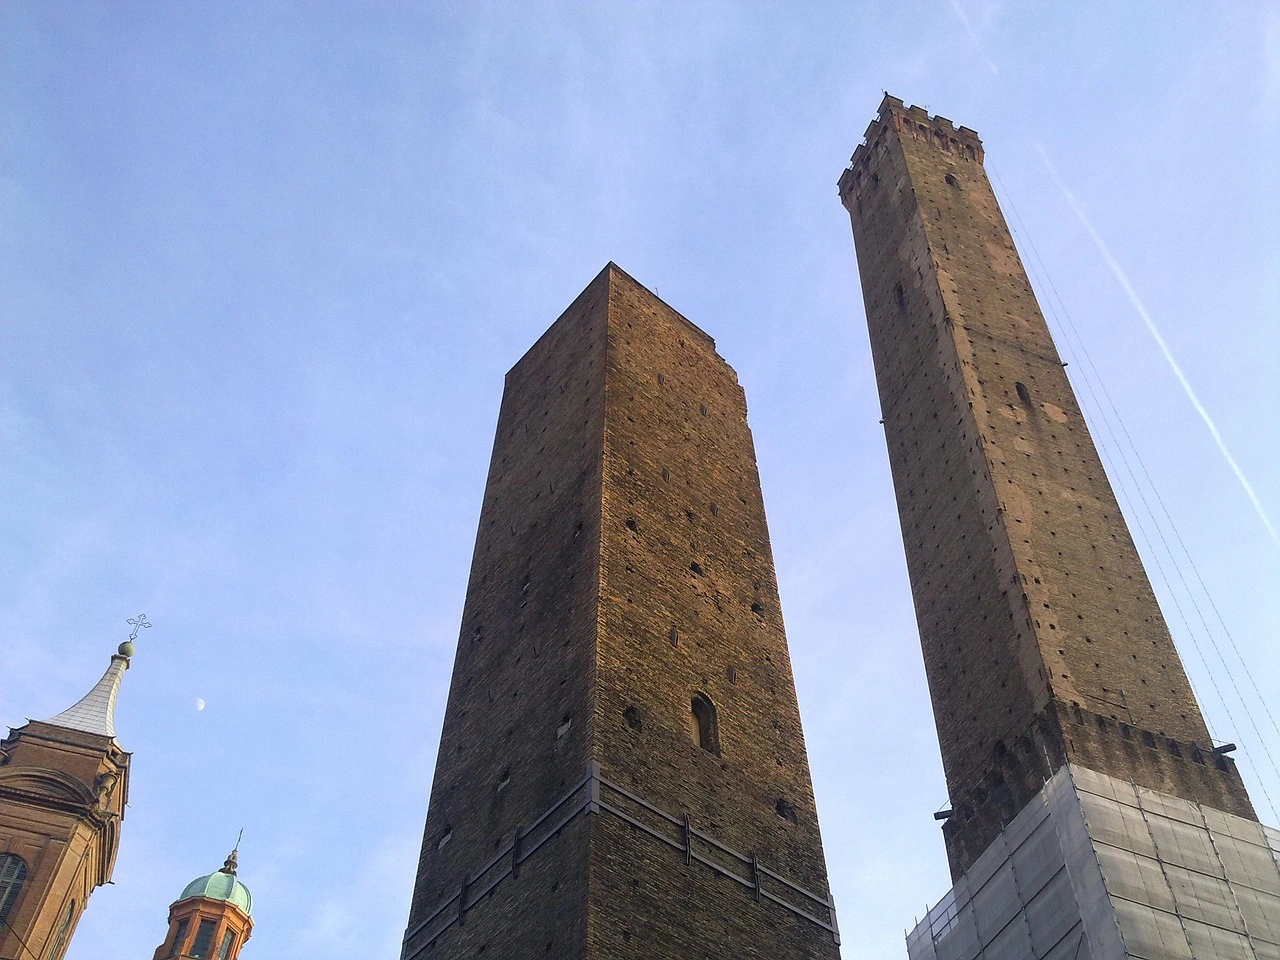 Le Due Torri Torre degli Asinell